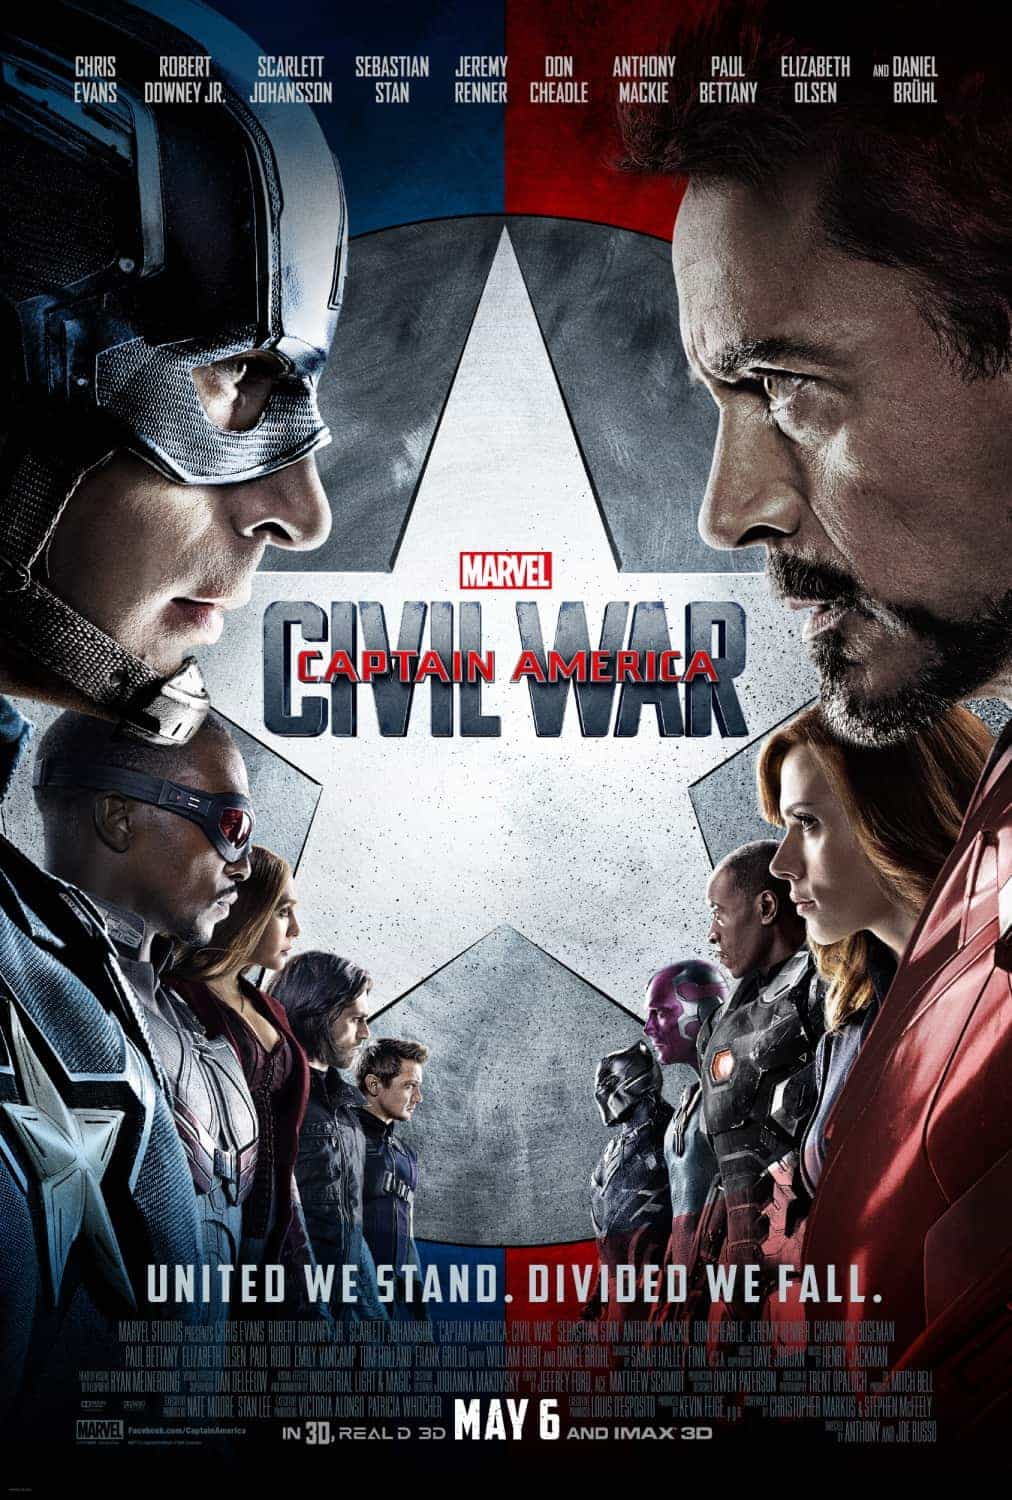 Super-bowl spot for Captain America Civil War - who